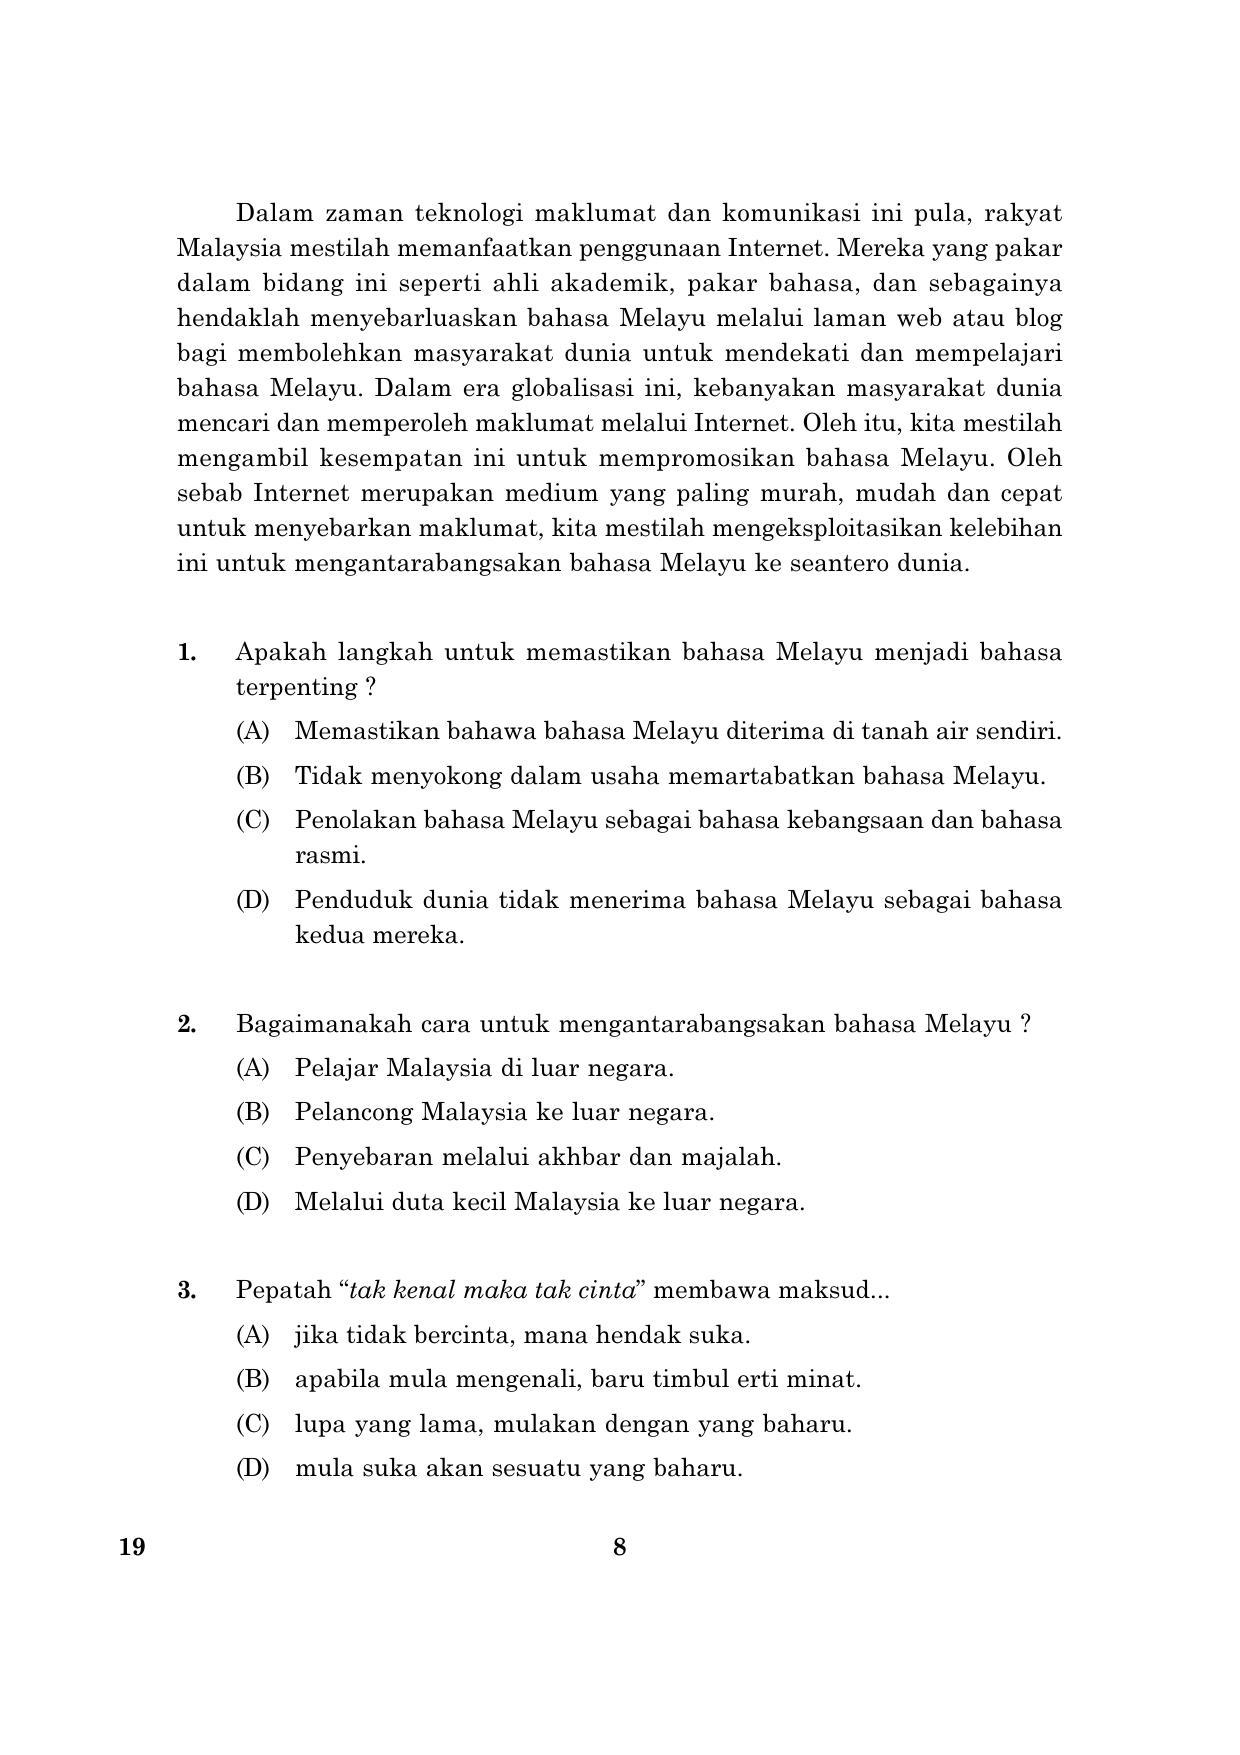 CBSE Class 10 019 Bahasamelayu English 2016 Question Paper - Page 8